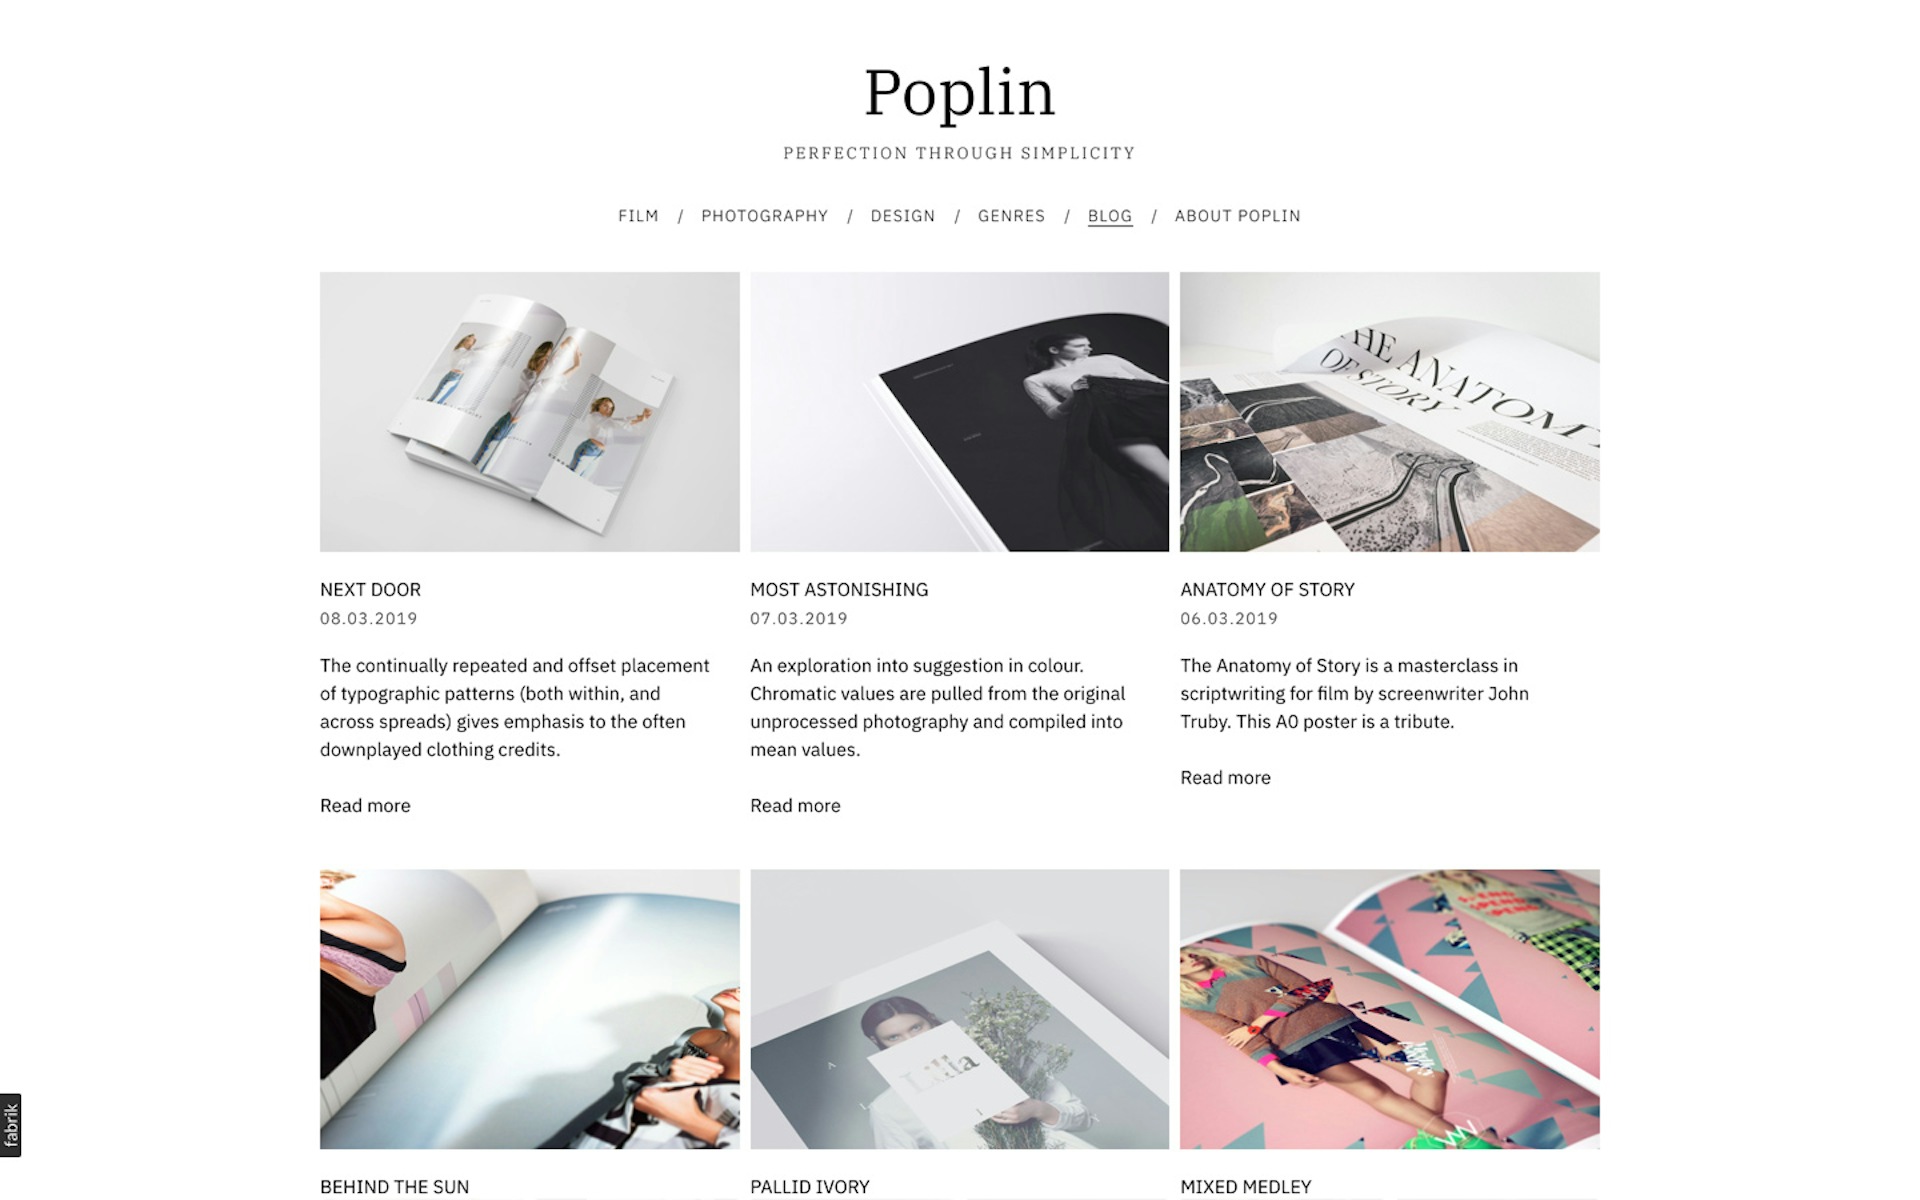 Poplin theme for Fabrik portfolio website